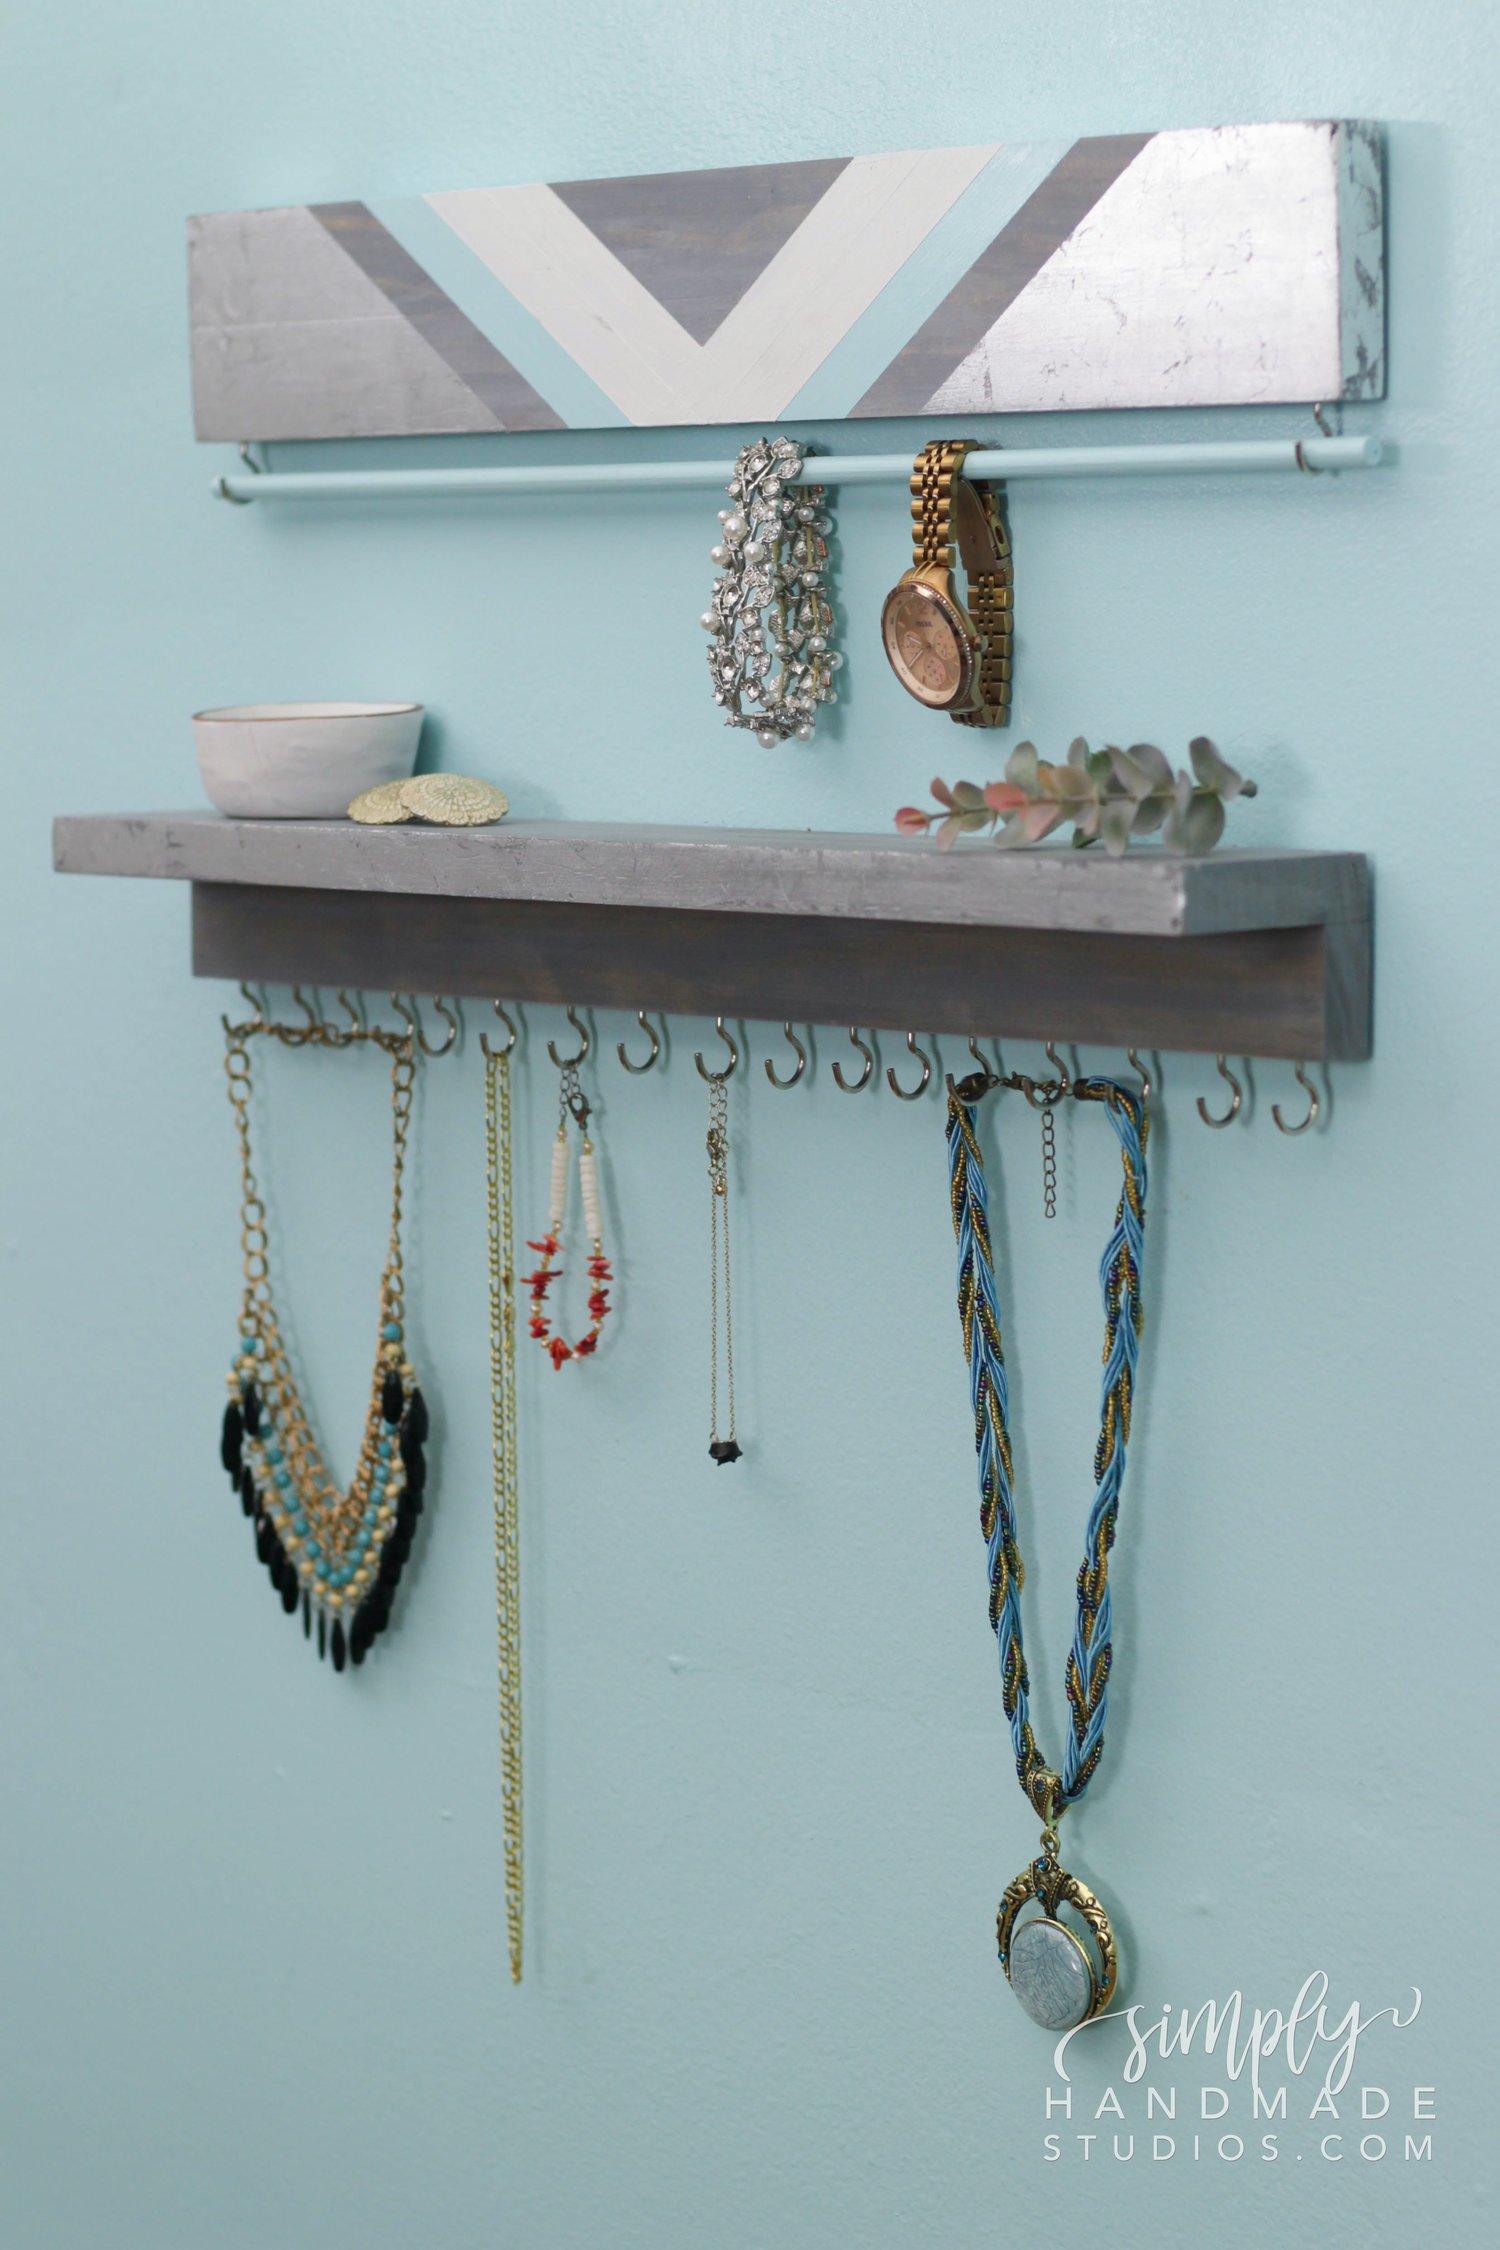 Beautiful Driftwood Jewelry Hanger You Can Make - DIY Candy